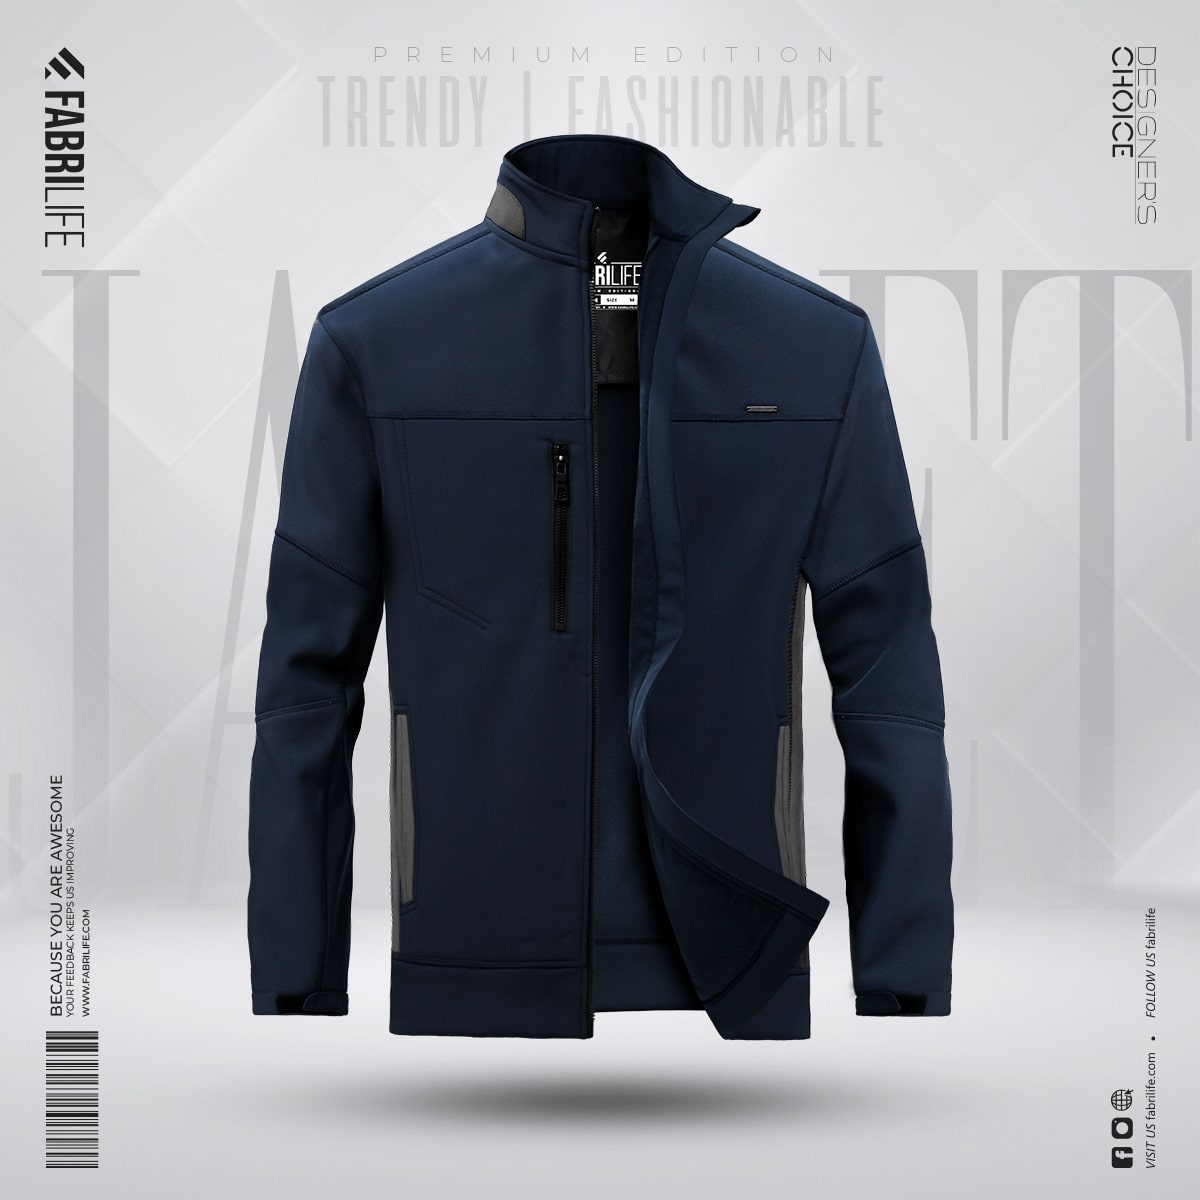 Mens Premium Jacket - Blizzard (Navy) - At Best Price | Fabrilife